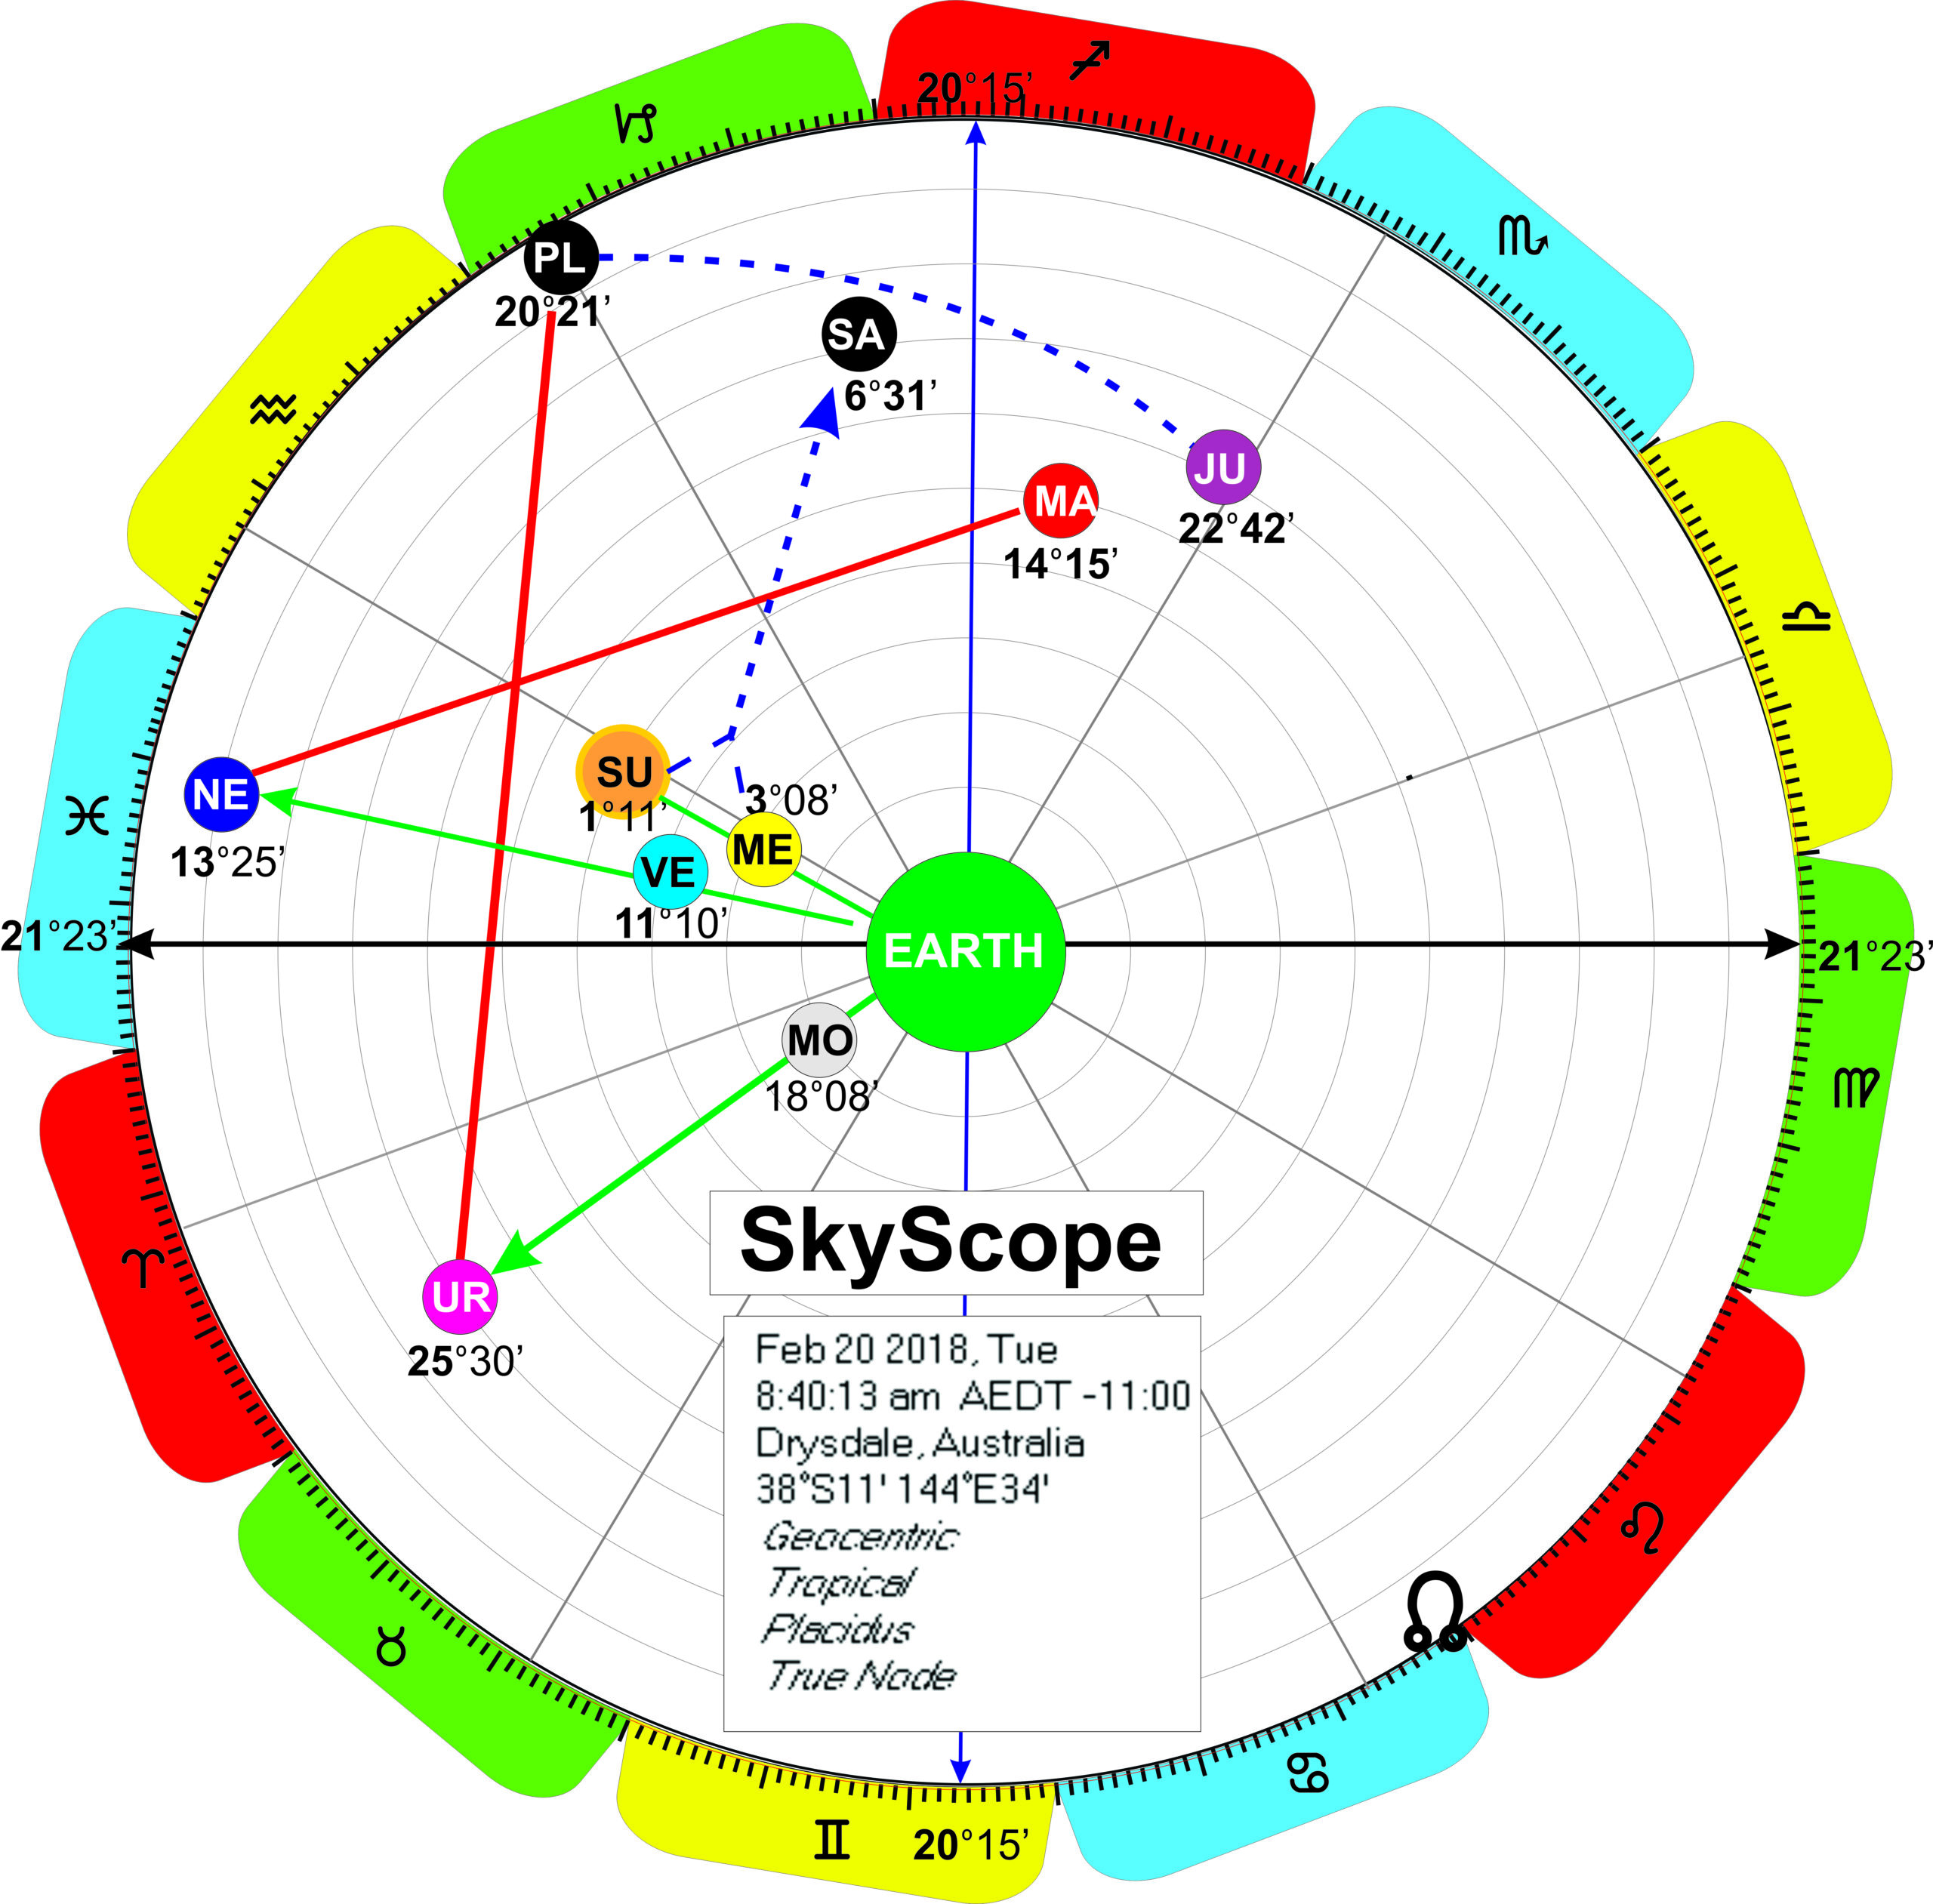 SkyScope